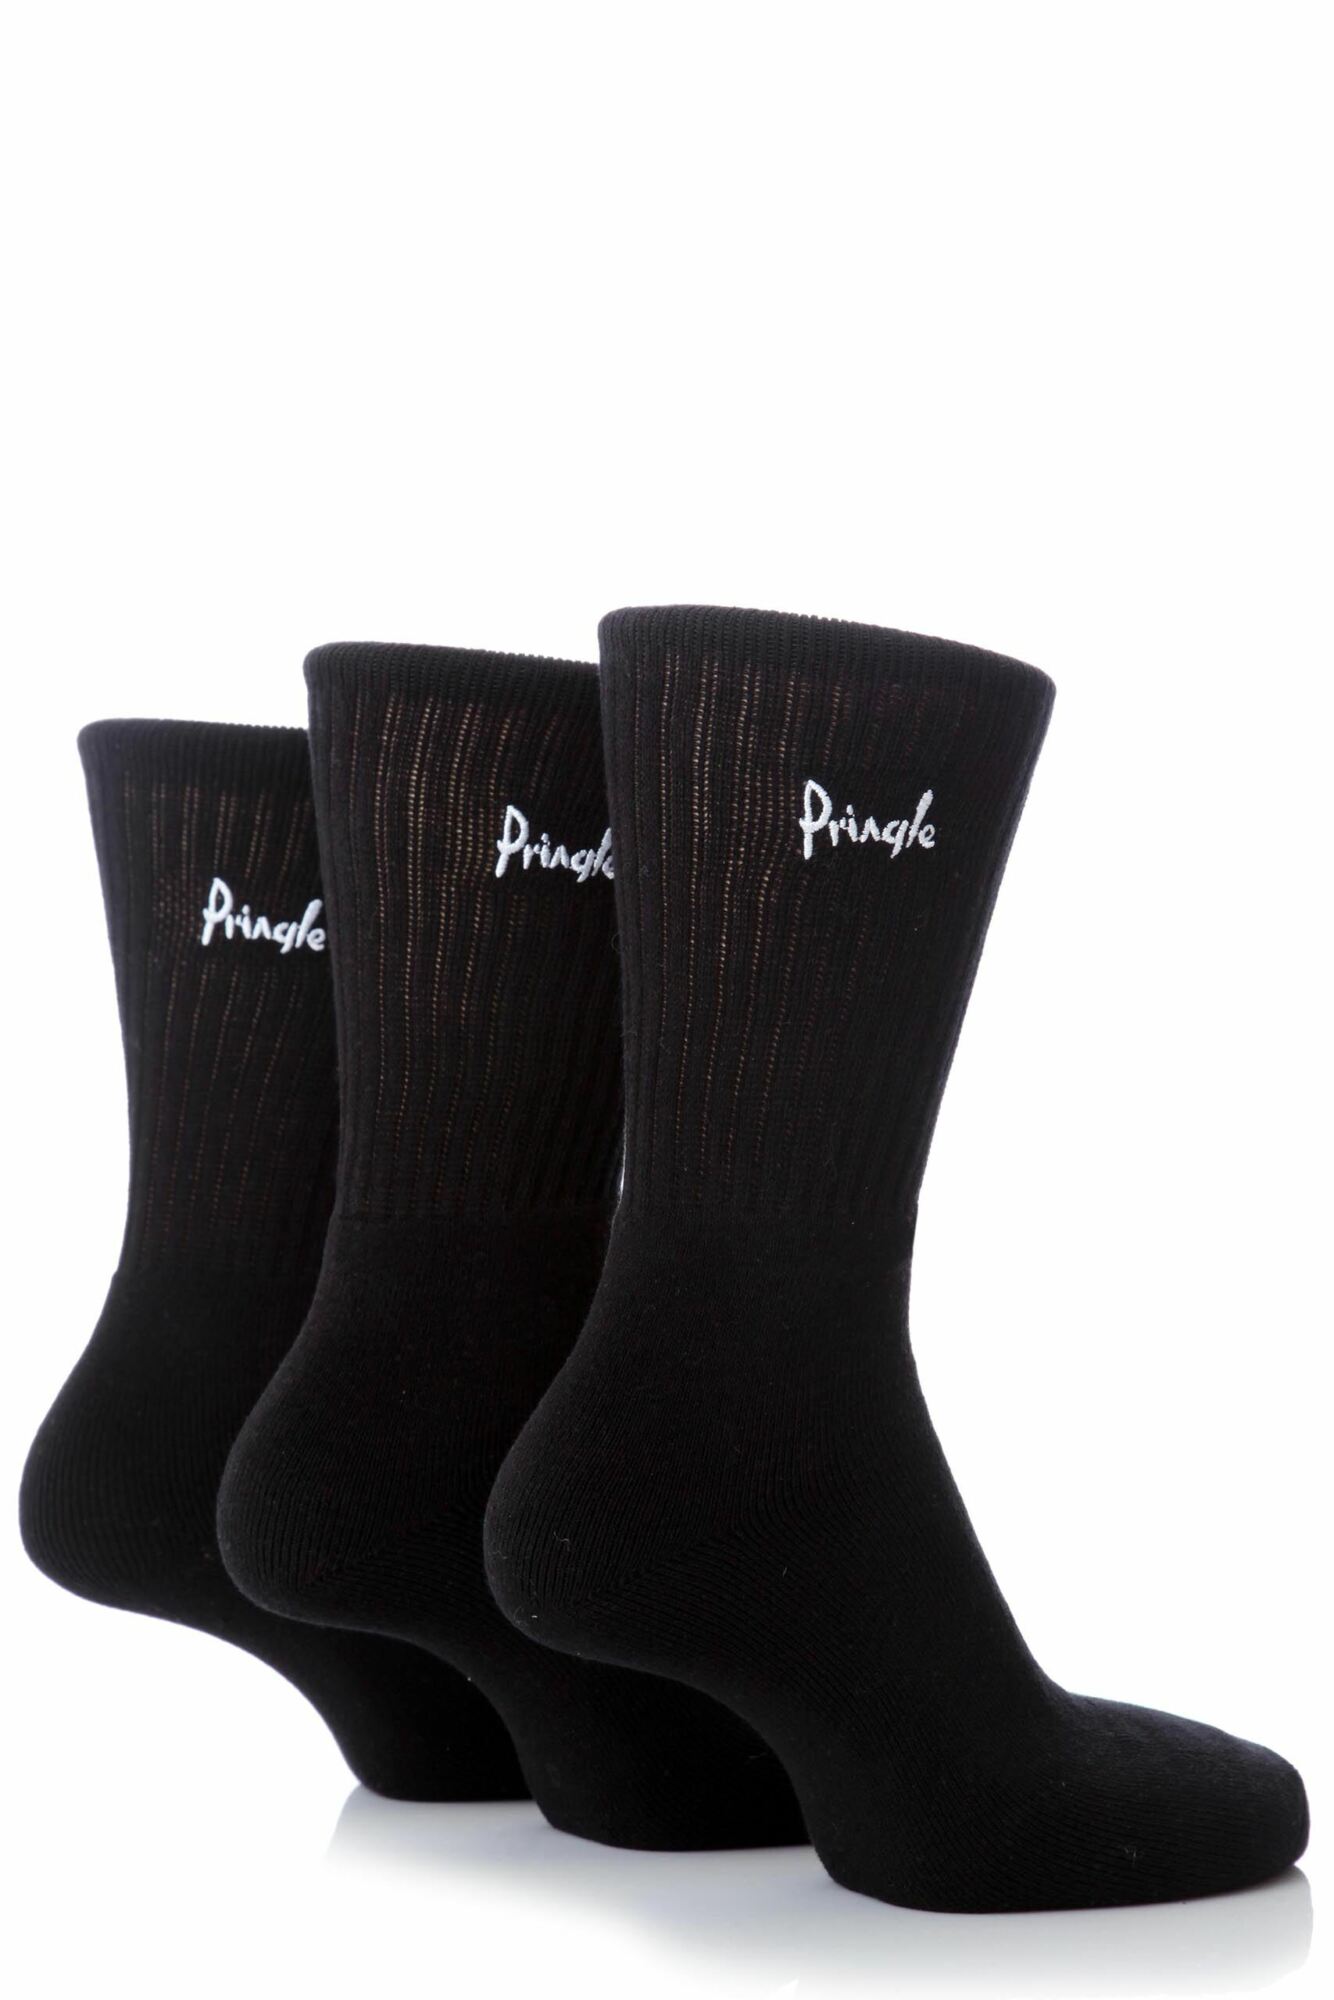 3 Pair Full Cushion Sports Socks Men's - Pringle